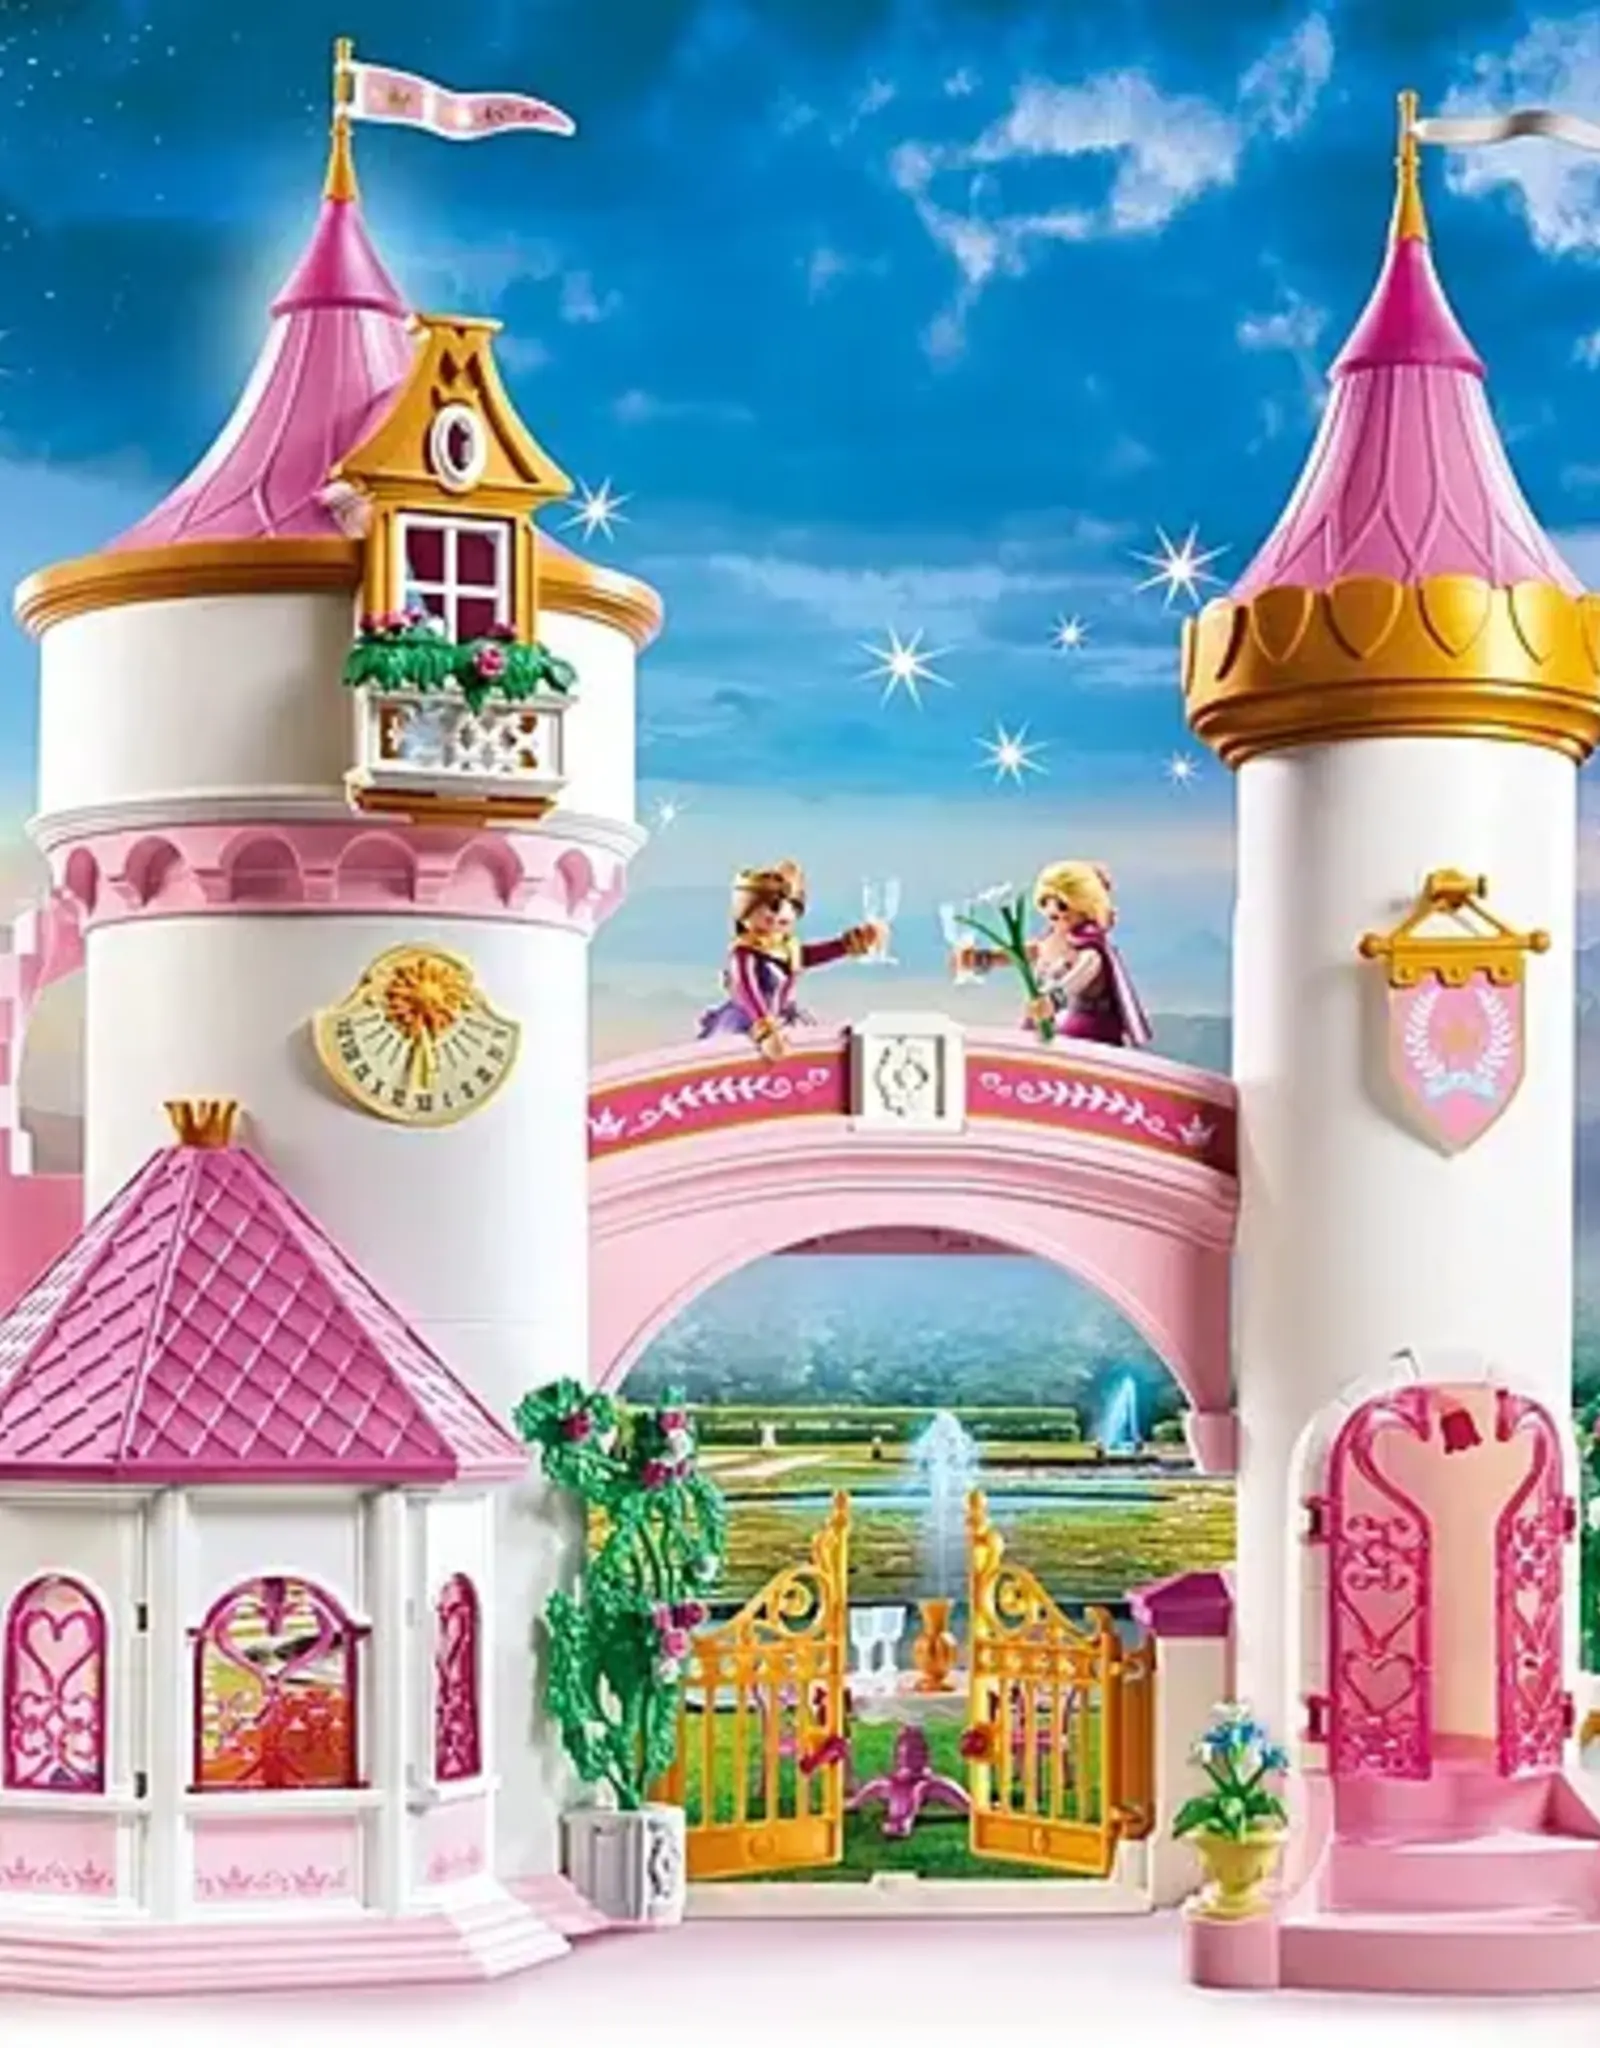 PLAYMOBIL U.S.A. Princess Castle